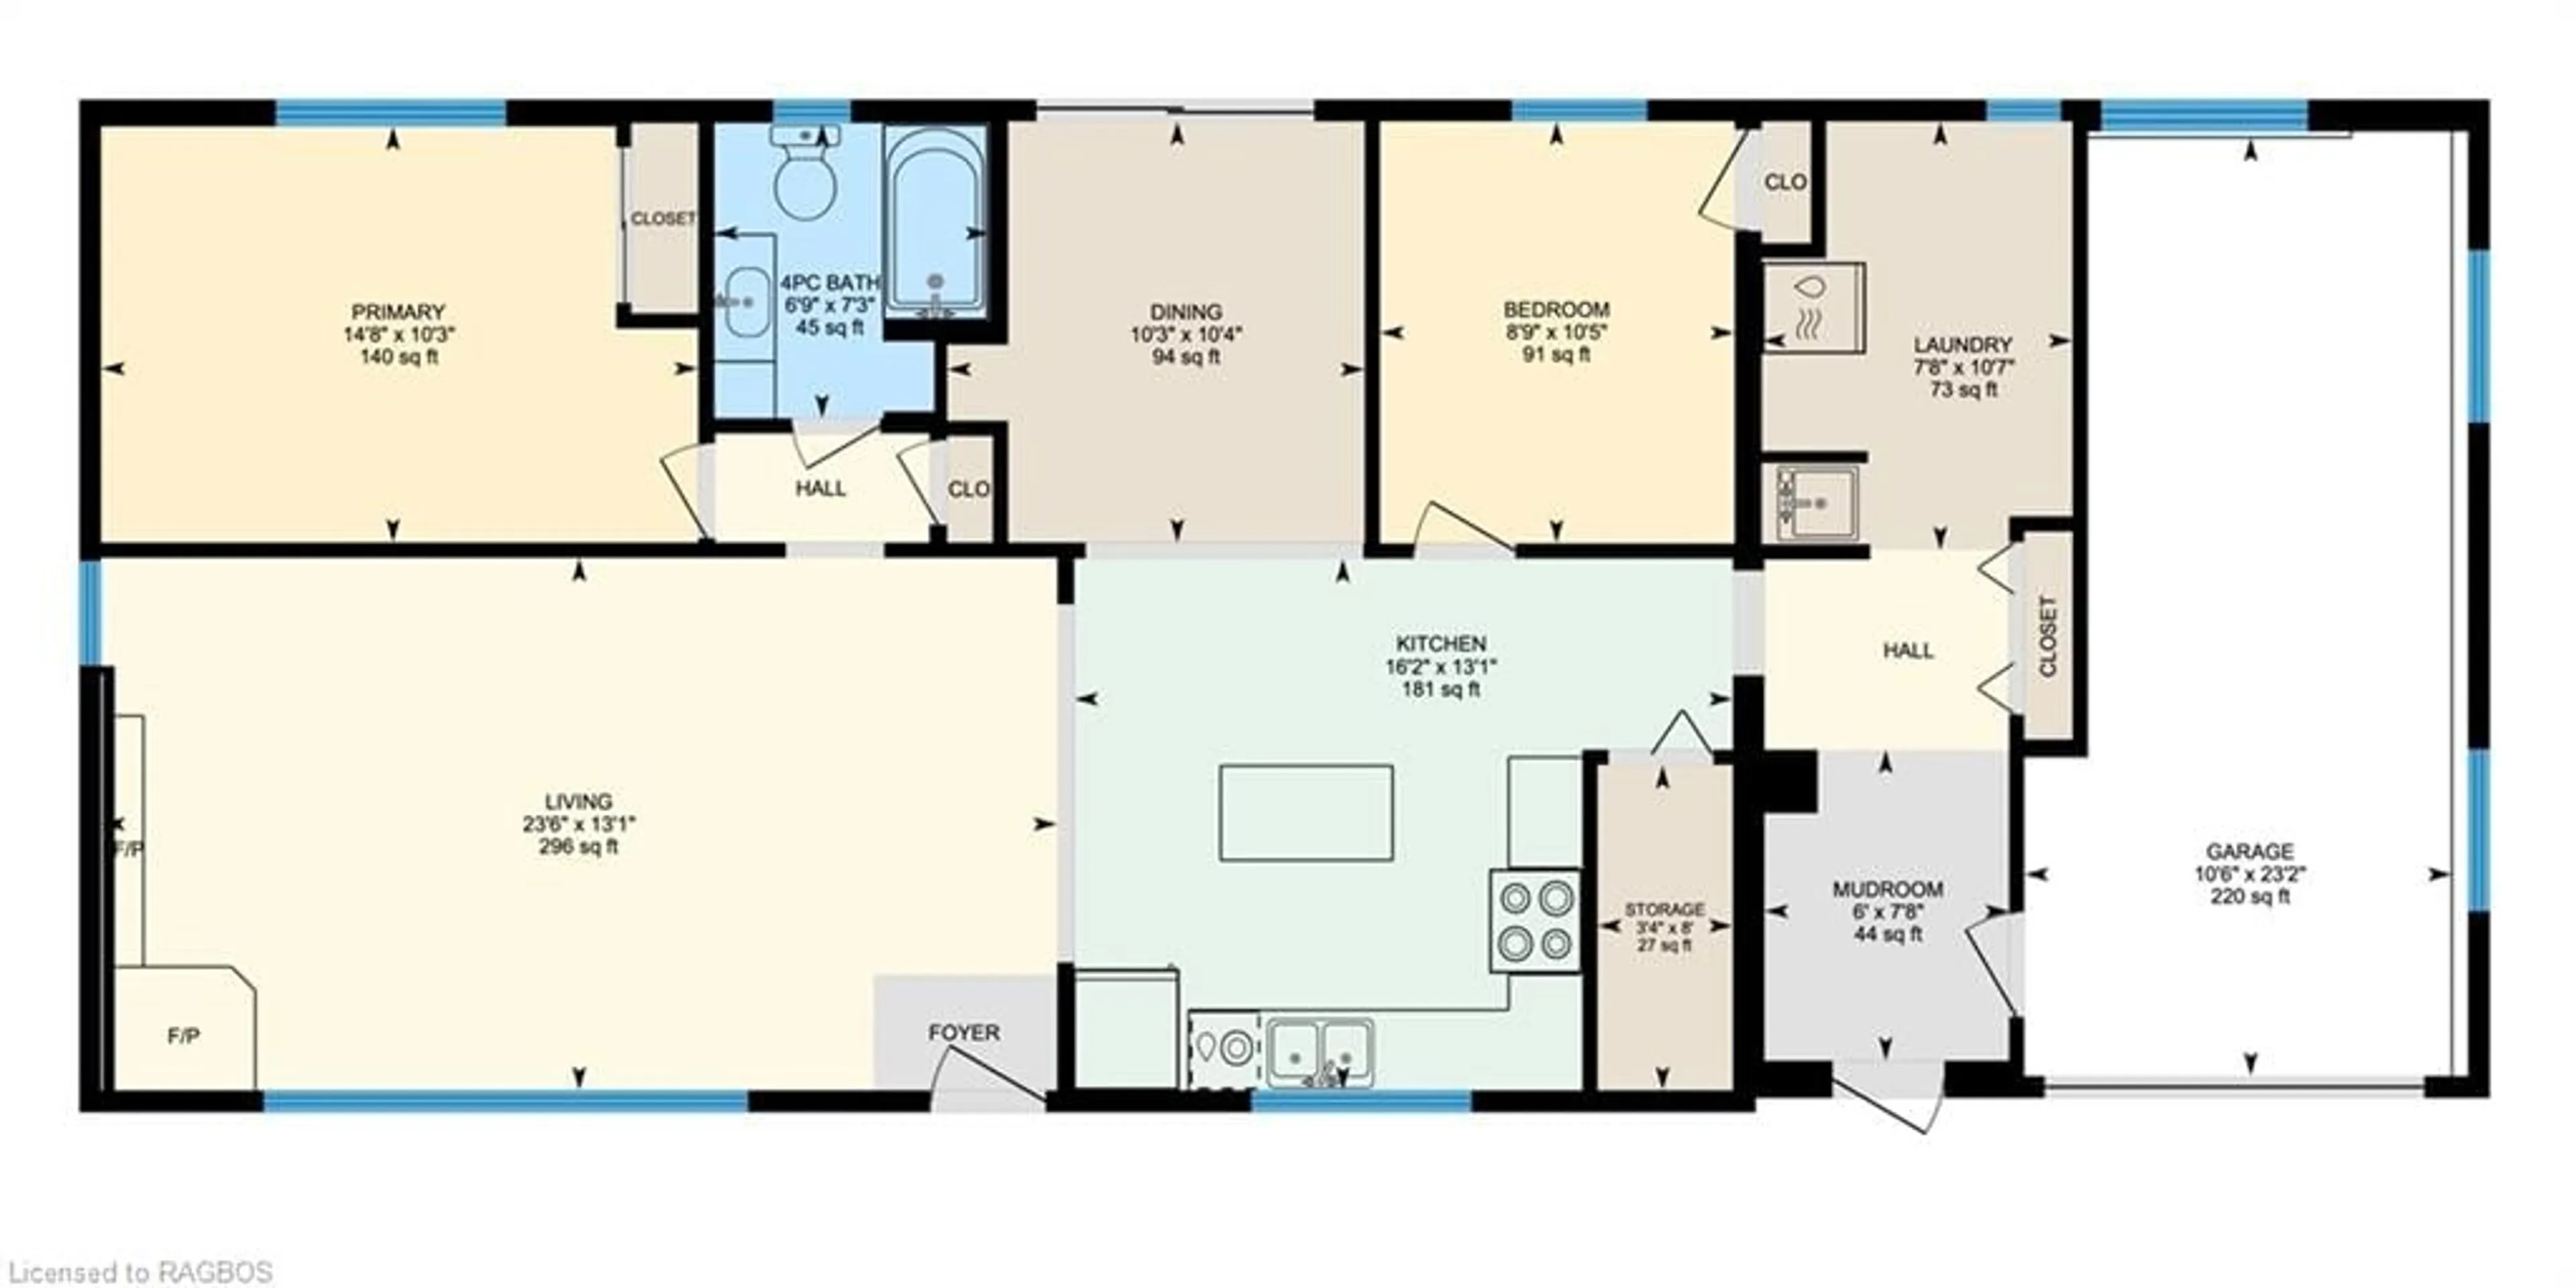 Floor plan for 25 Avele Rd, Red Bay Ontario N0H 2T0